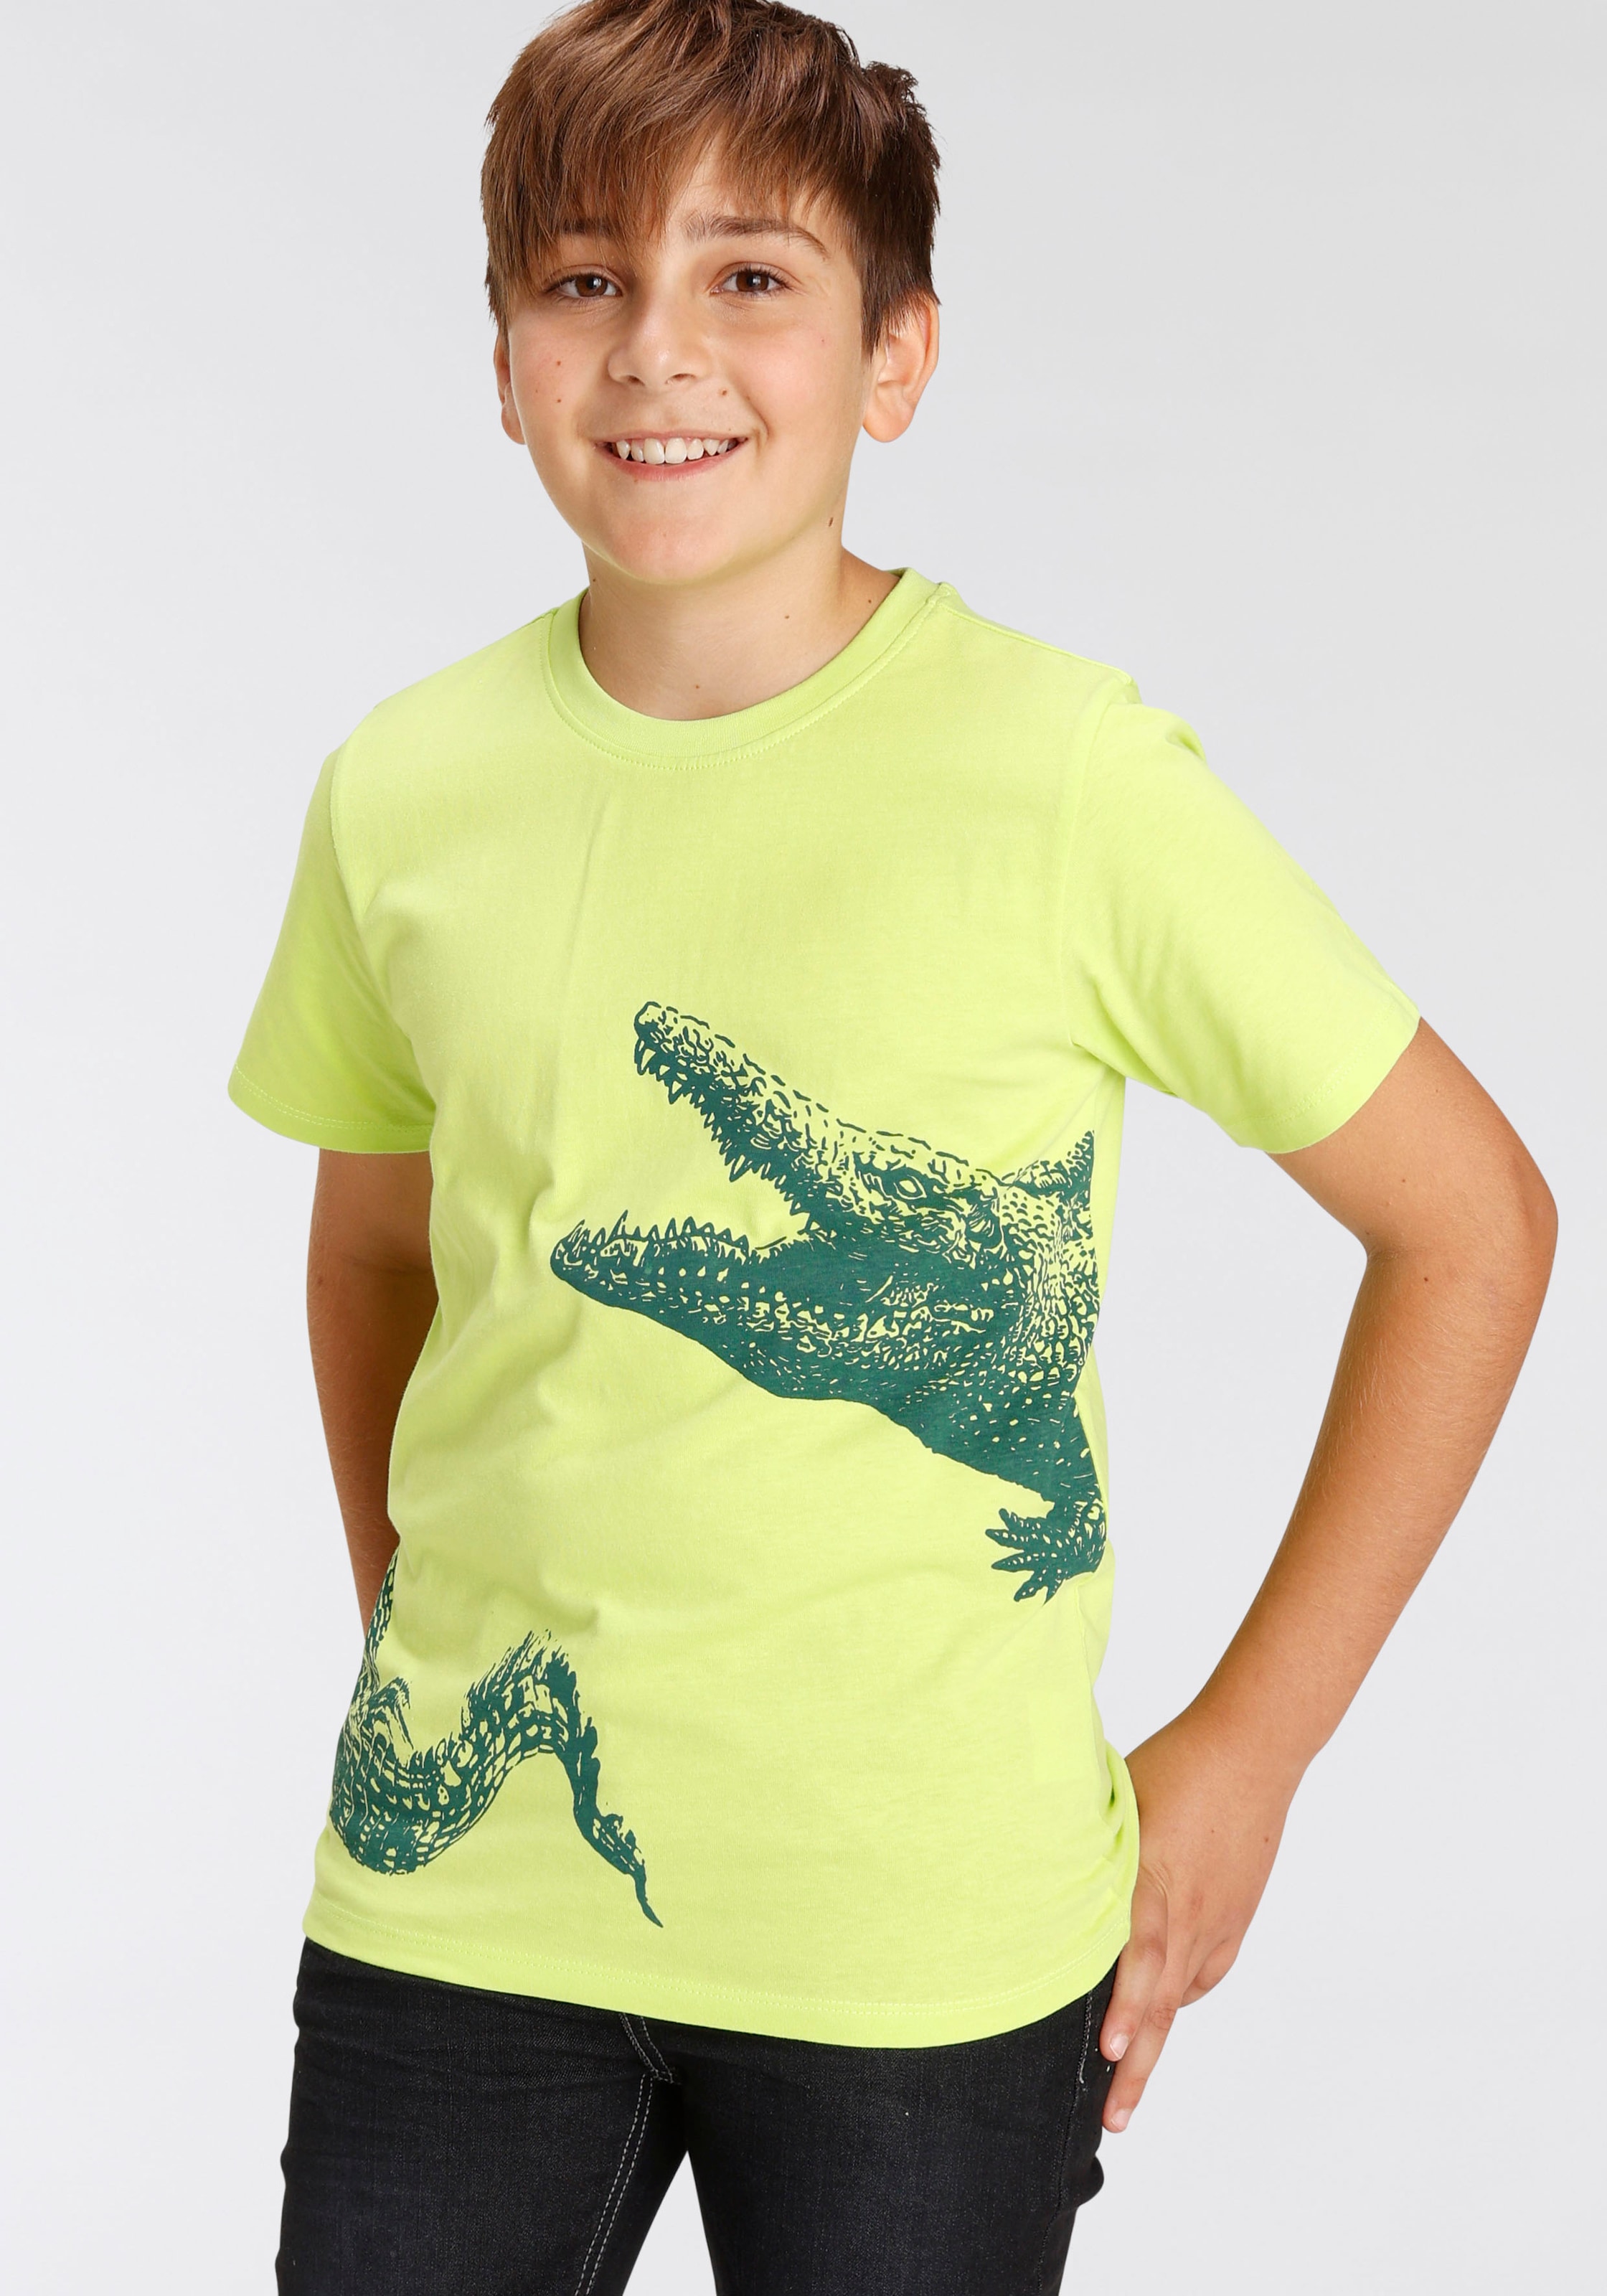 KIDSWORLD Trendige T-Shirt bestellen »KROKODIL« versandkostenfrei